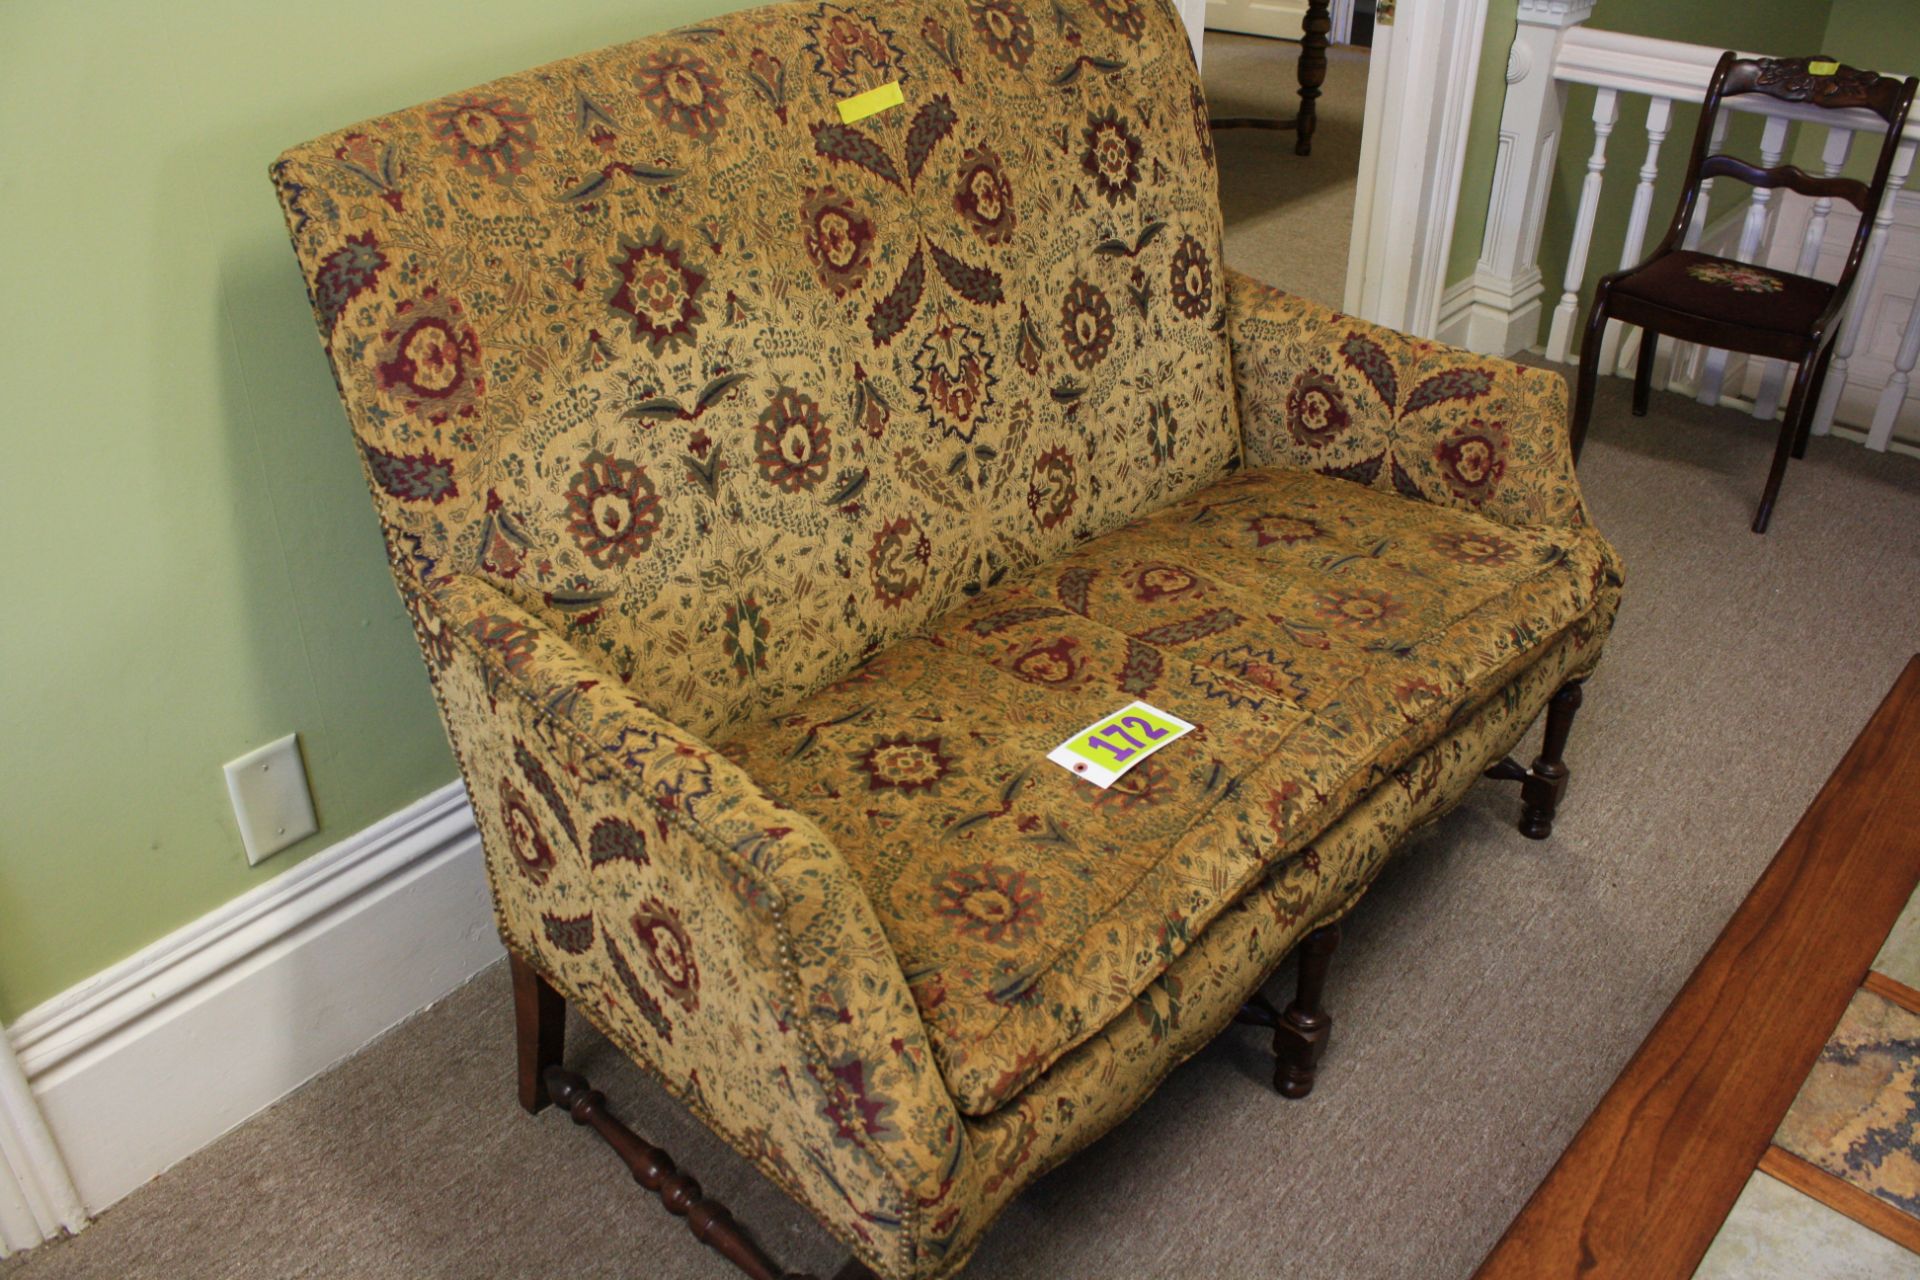 Antique High-Back Sofa, Fabric, 52" Wide